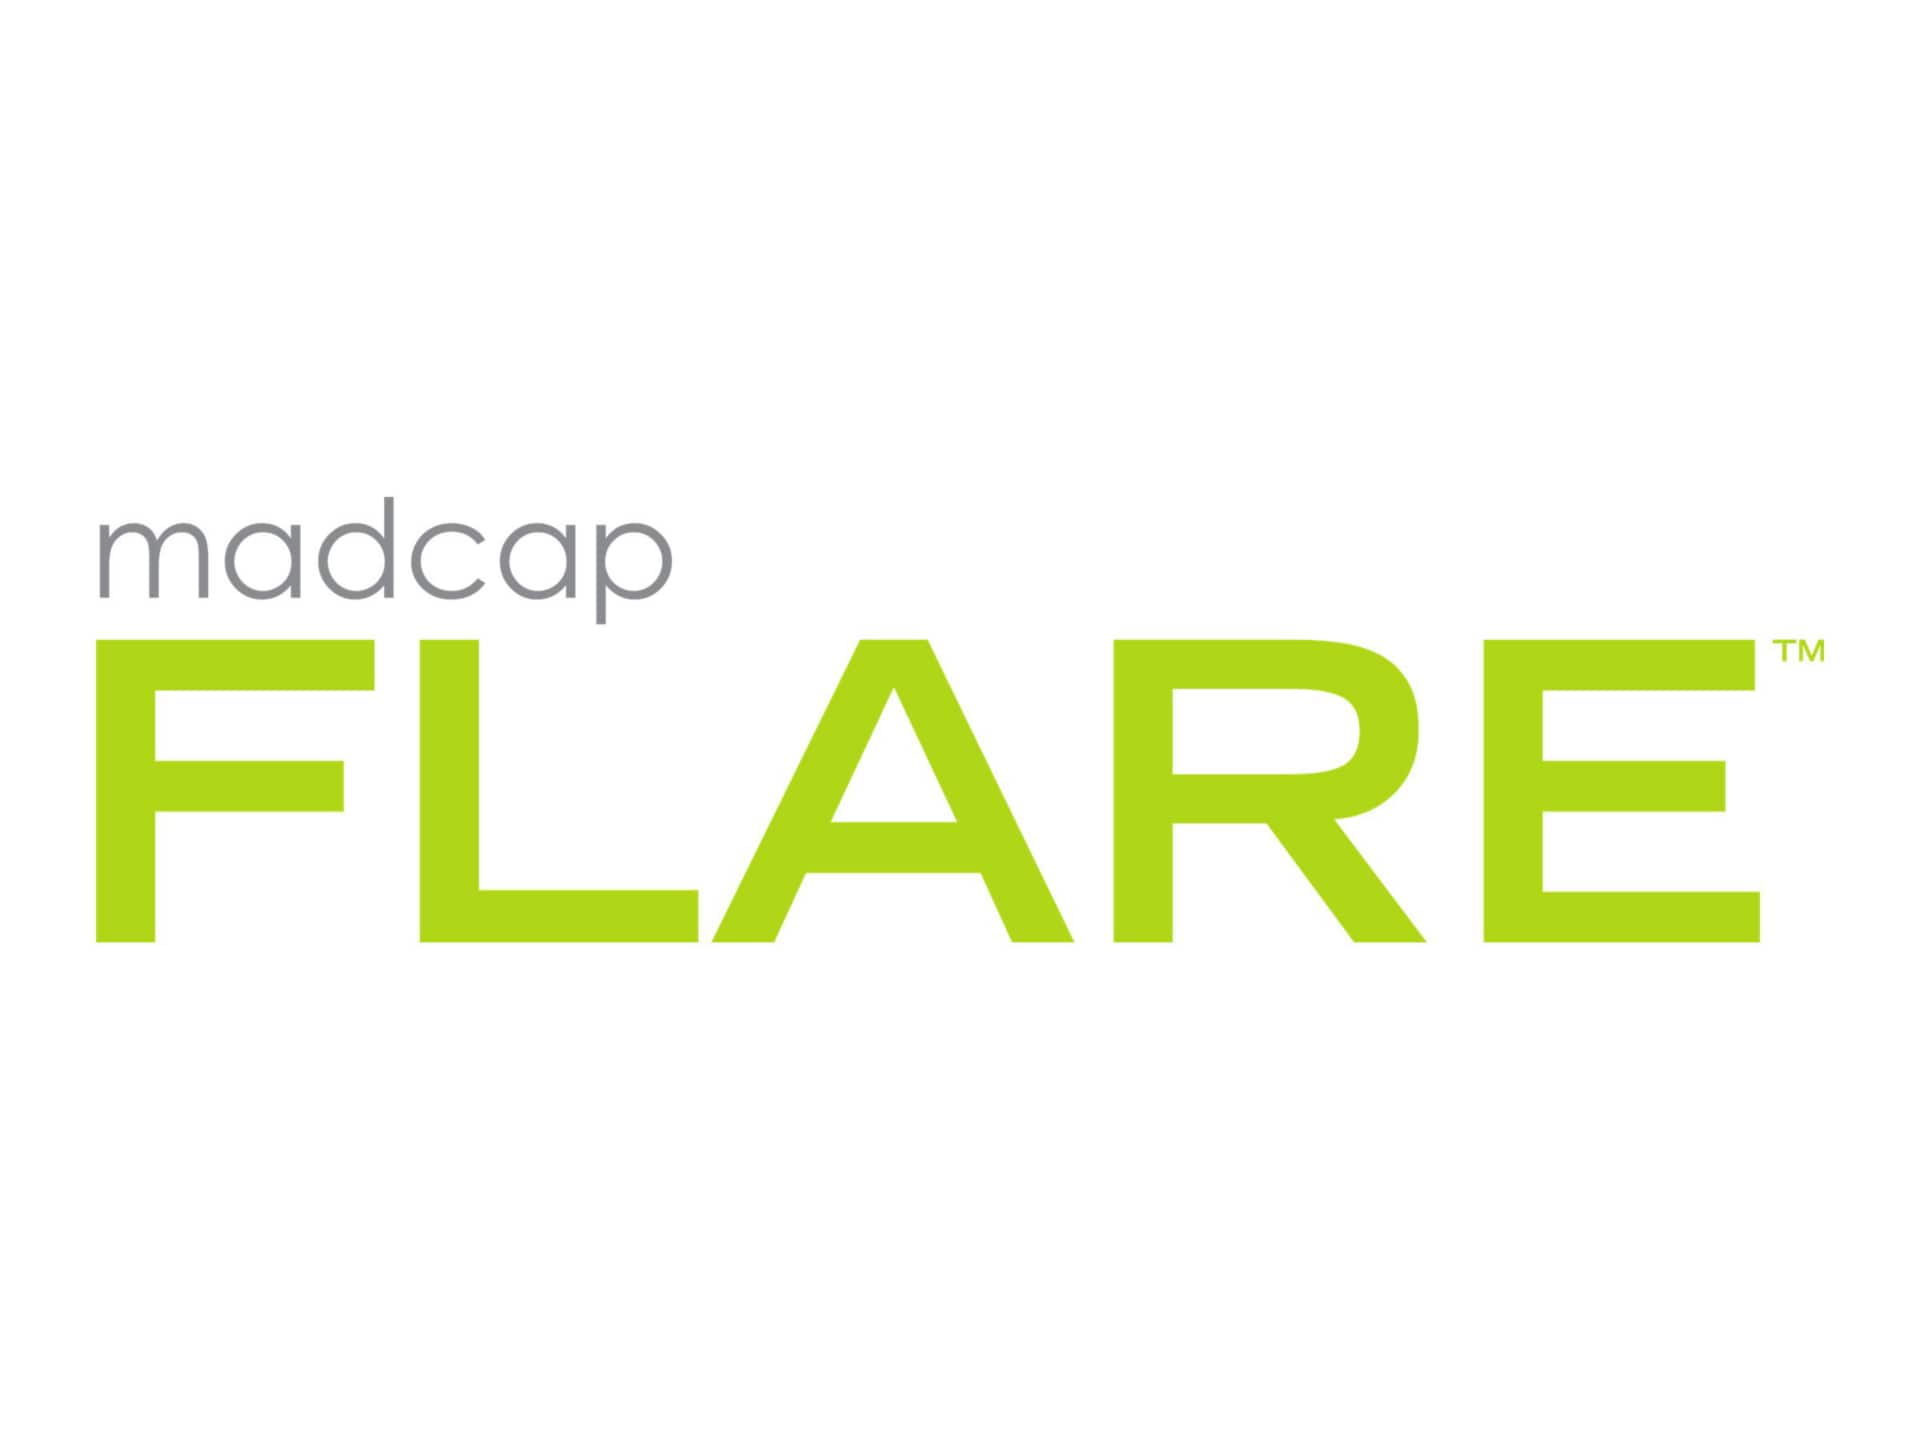 MadCap Flare - Floating Subscription License (1 year) + 1 Year Platinum Maintenance - 1 license